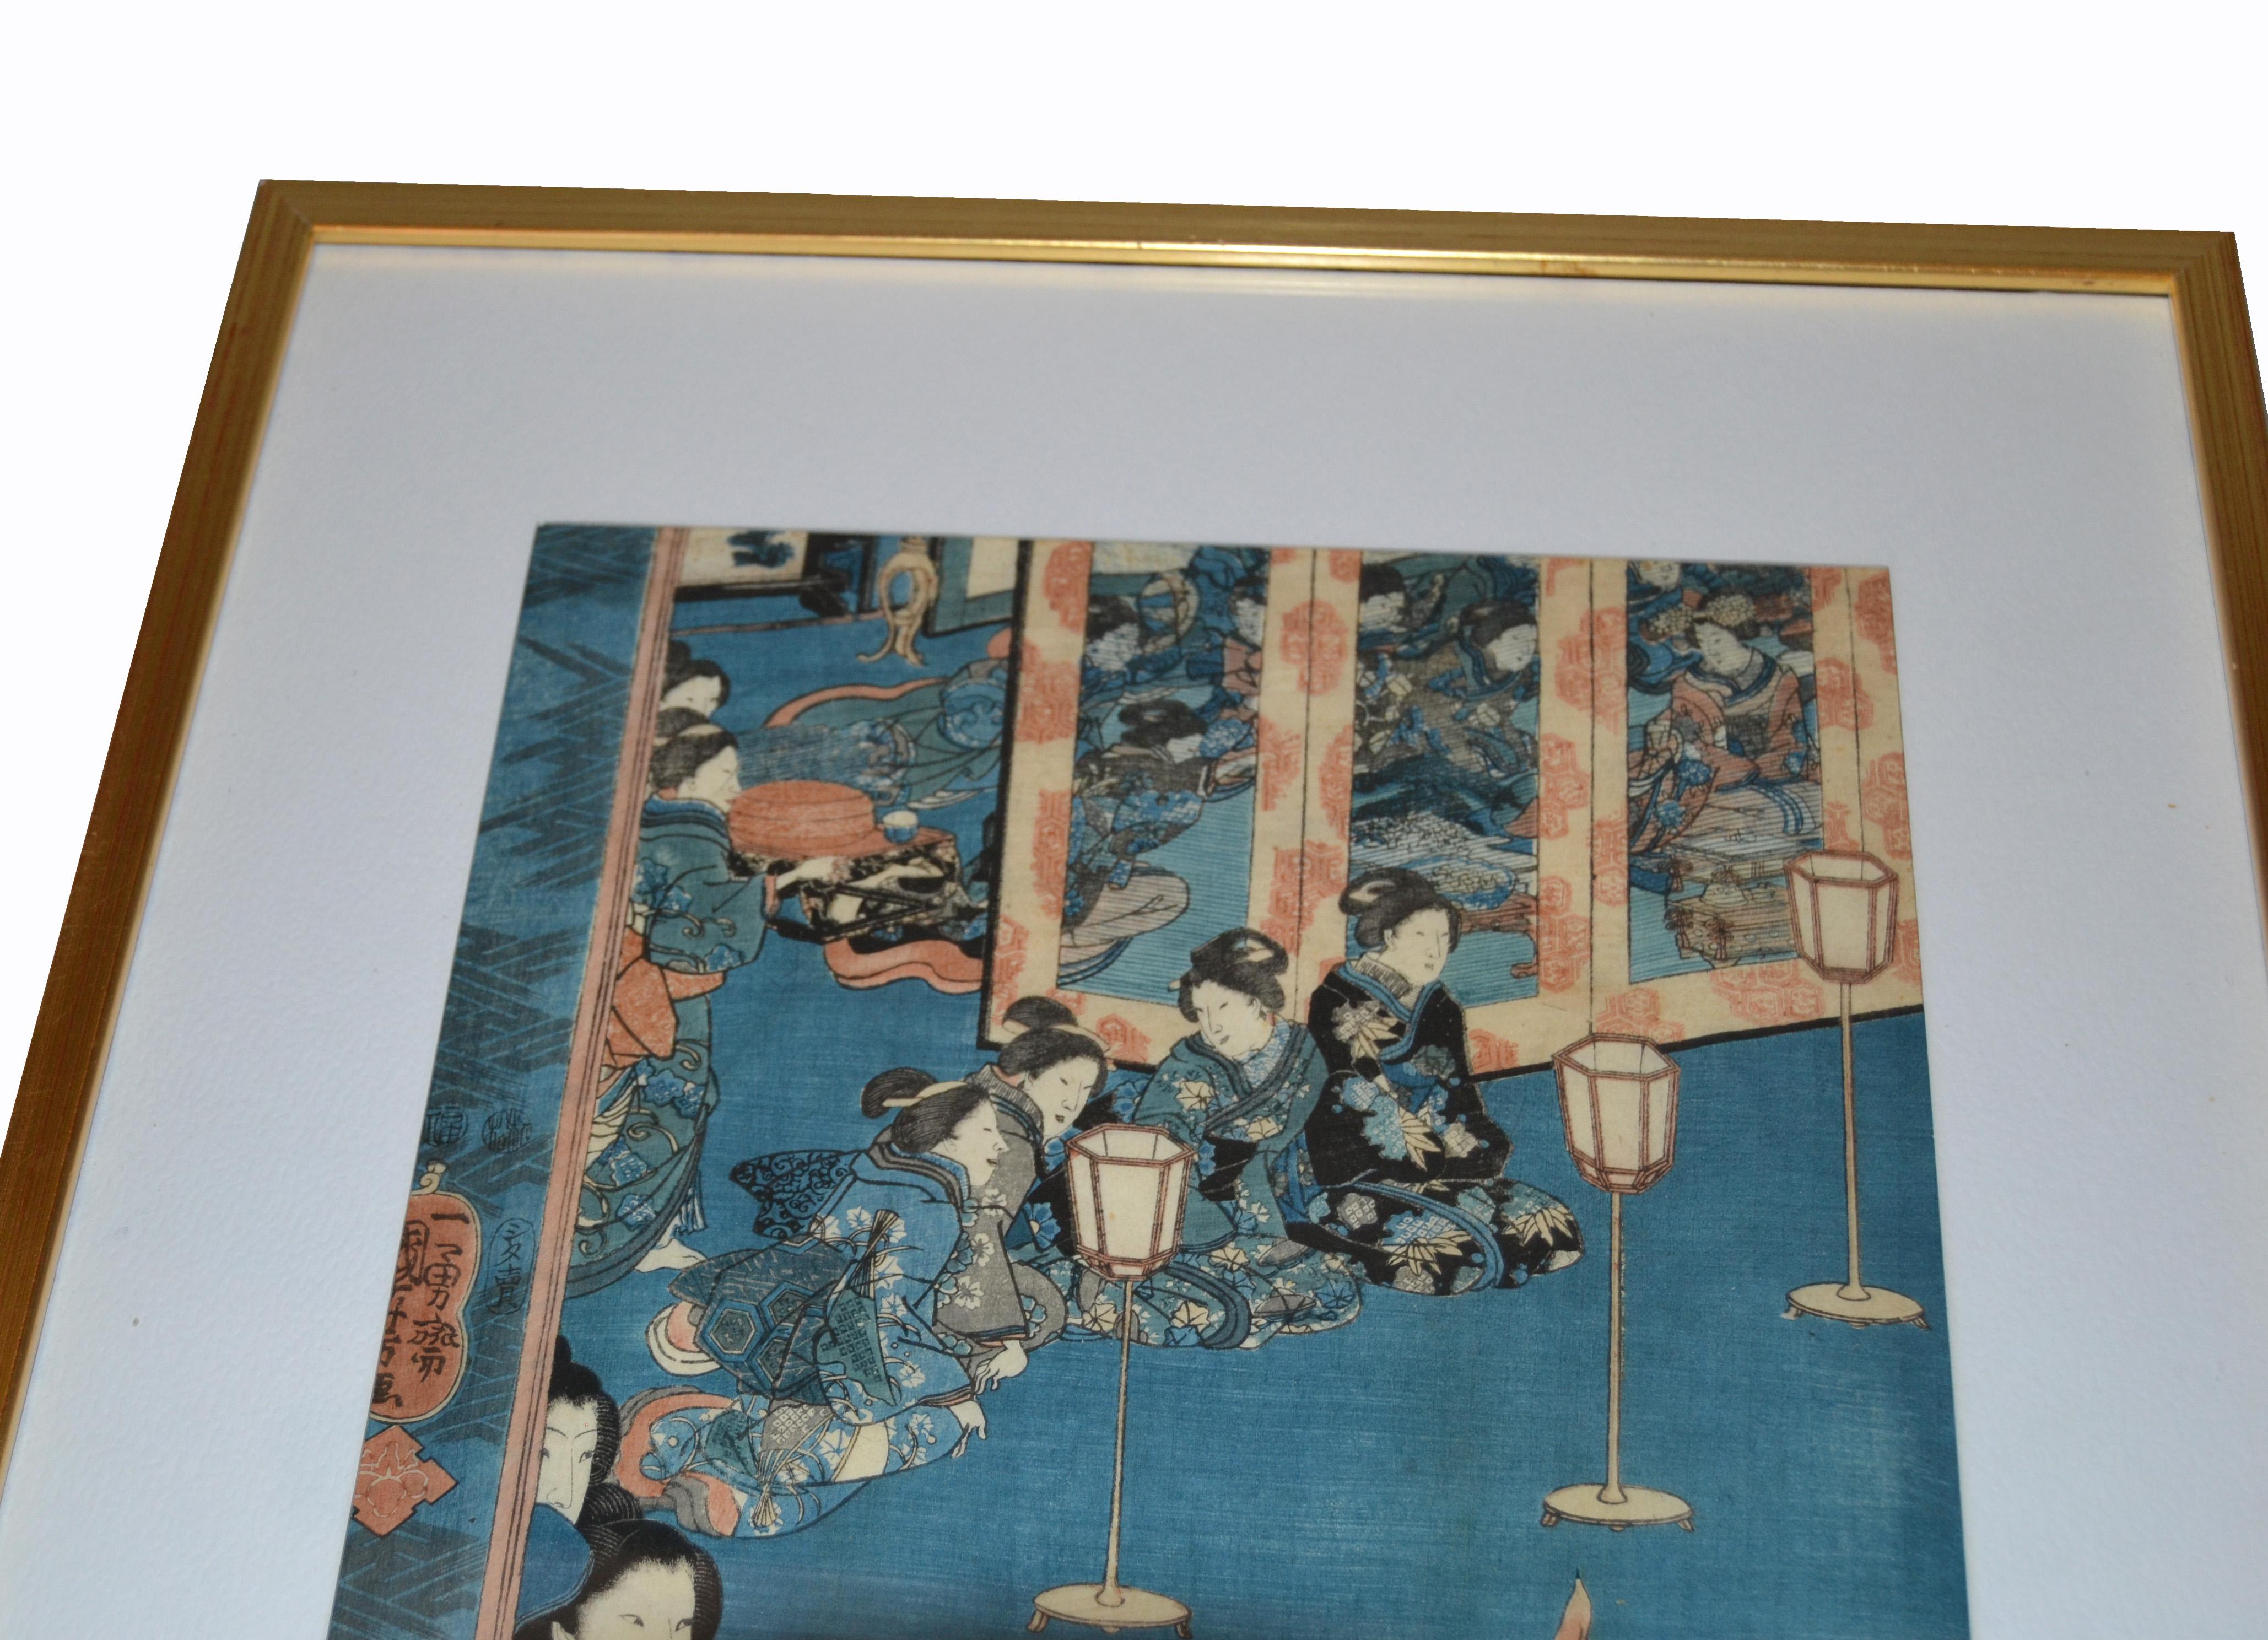 Meiji Gilt Framed Utagawa Kuniyoshi Japanese Original Woodcut Print on Paper, 1845